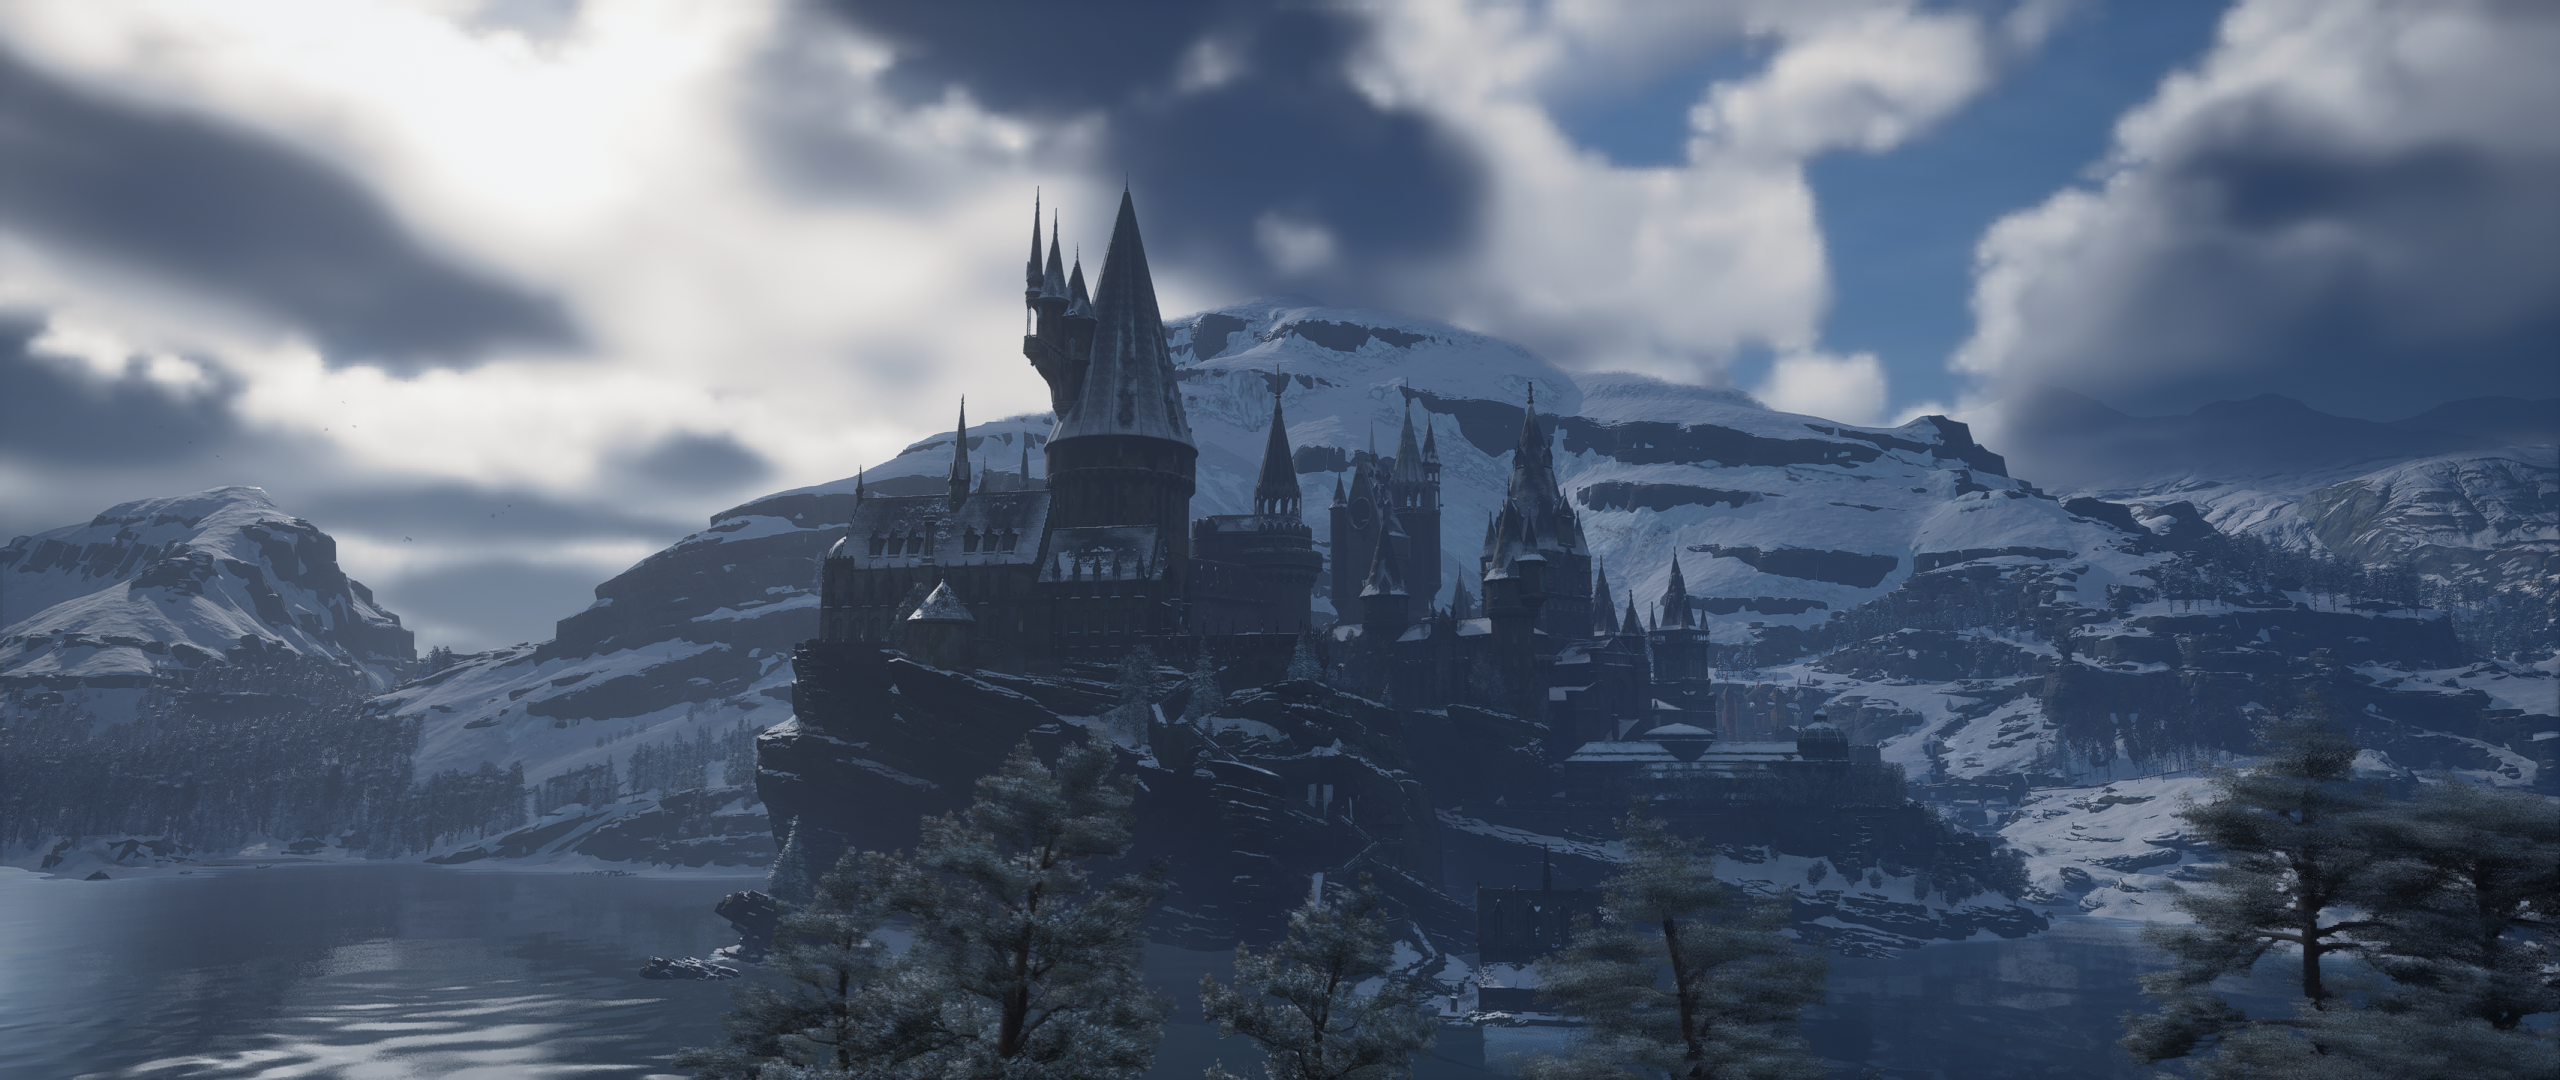 Hogwarts Hogwarts Legacy Harry Potter PC Gaming Landscape Screen Shot Avalanche Software Clouds Vide 2560x1080